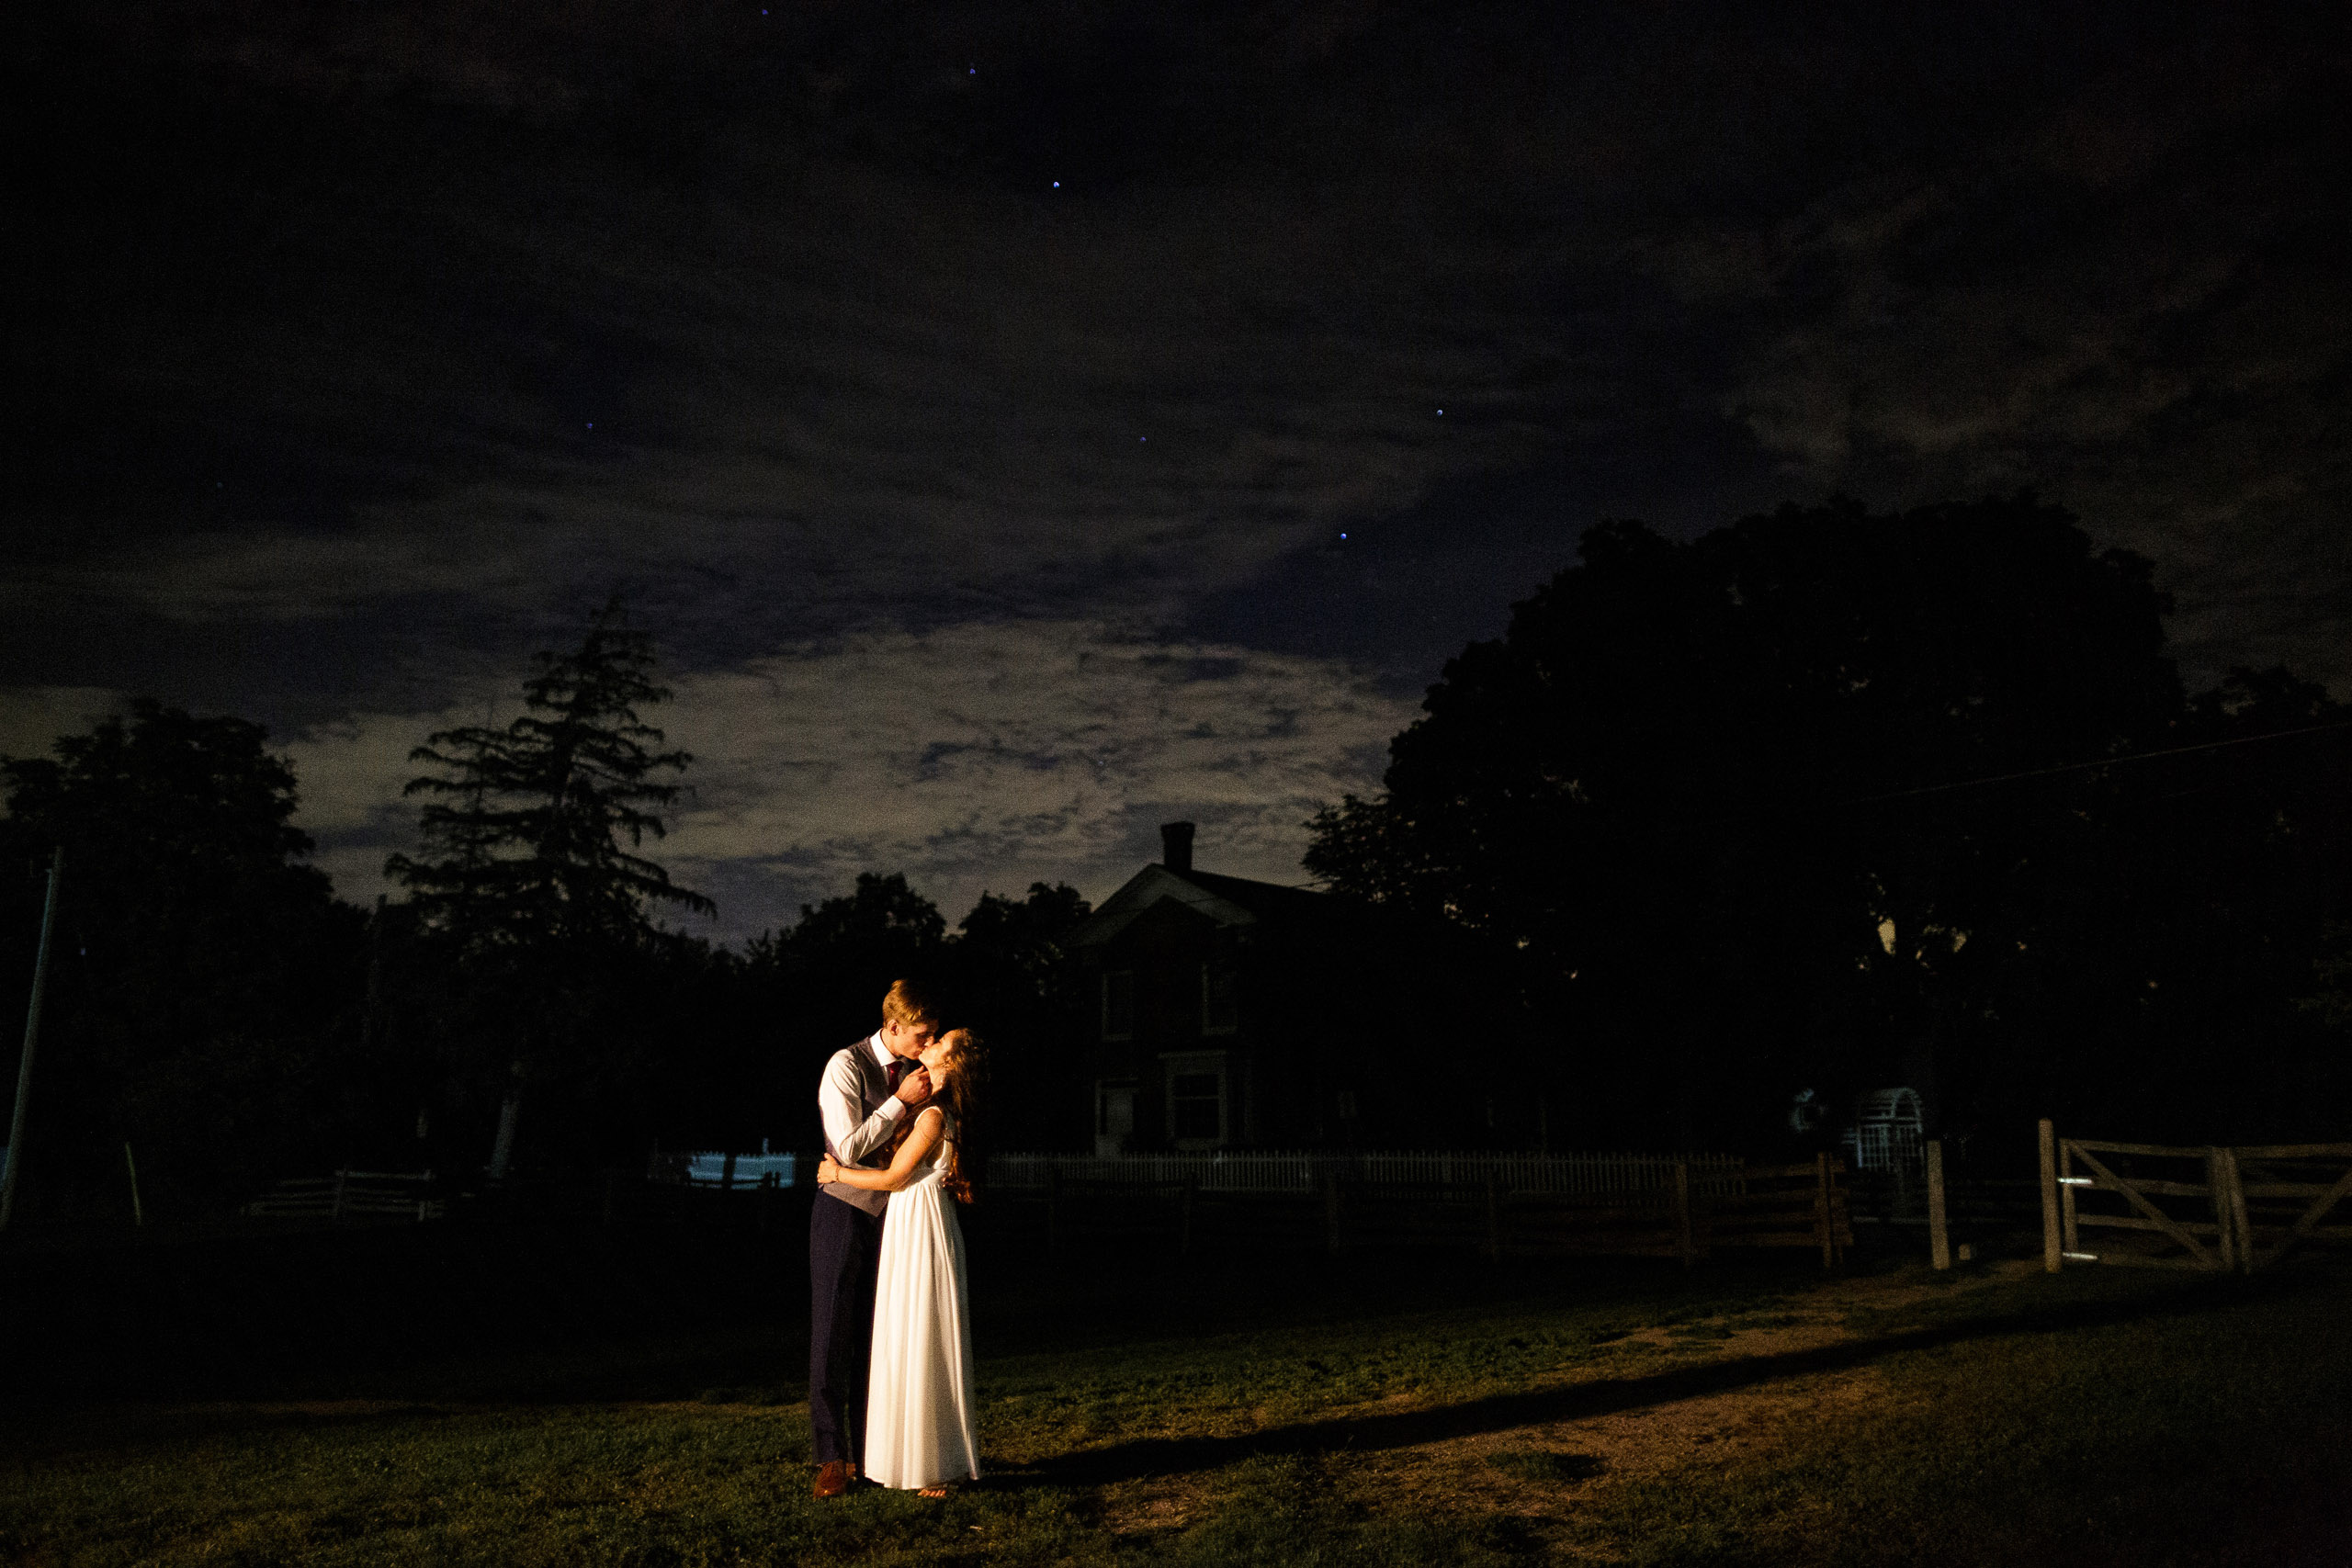 balls falls night wedding rustic barn stars wedding photographer brooker events